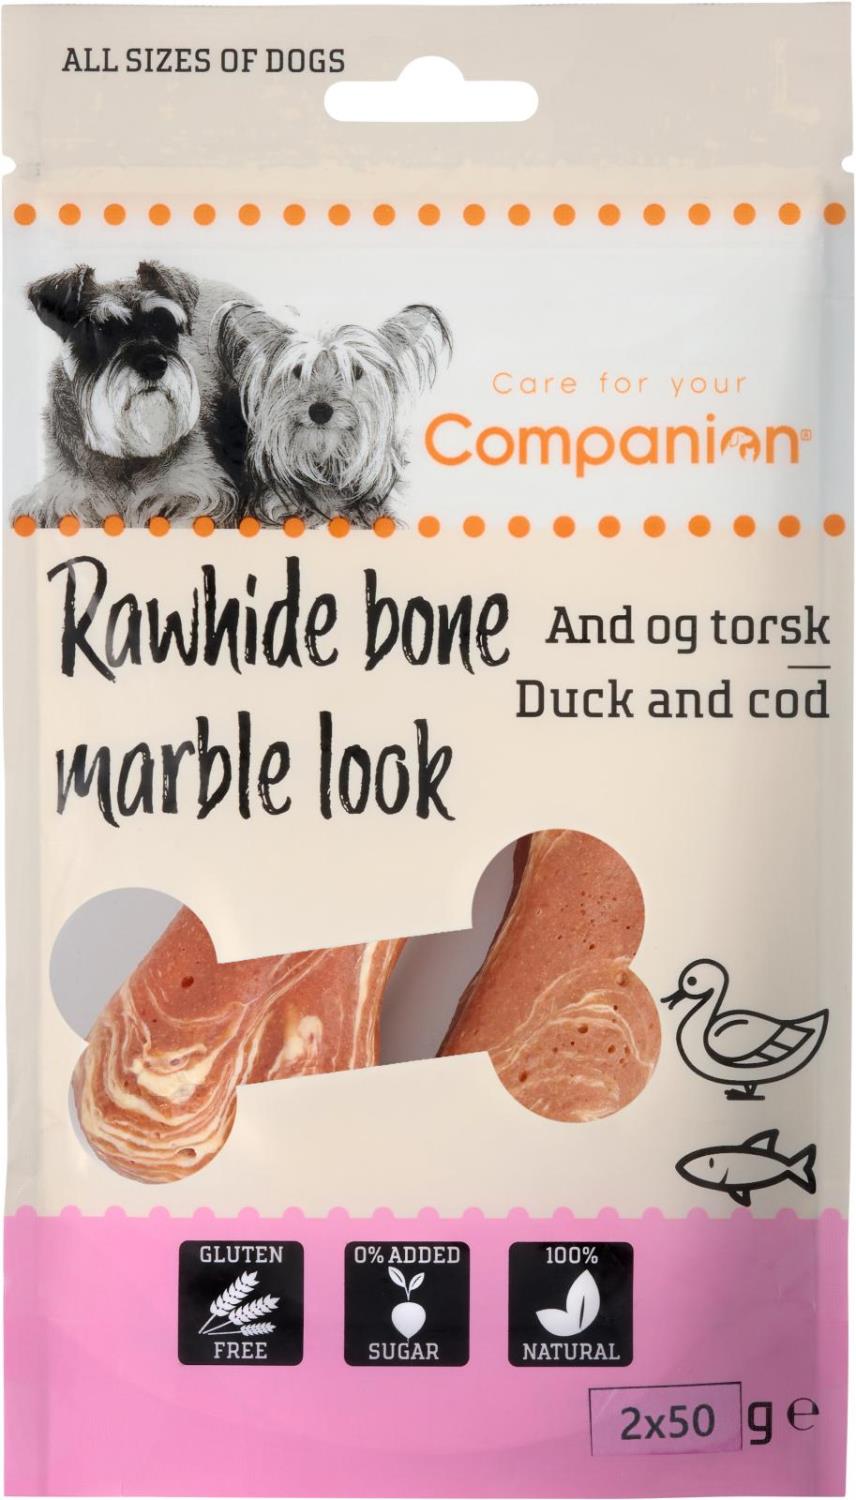 Companion Rawhide bone marble look and og torsk 2x50g